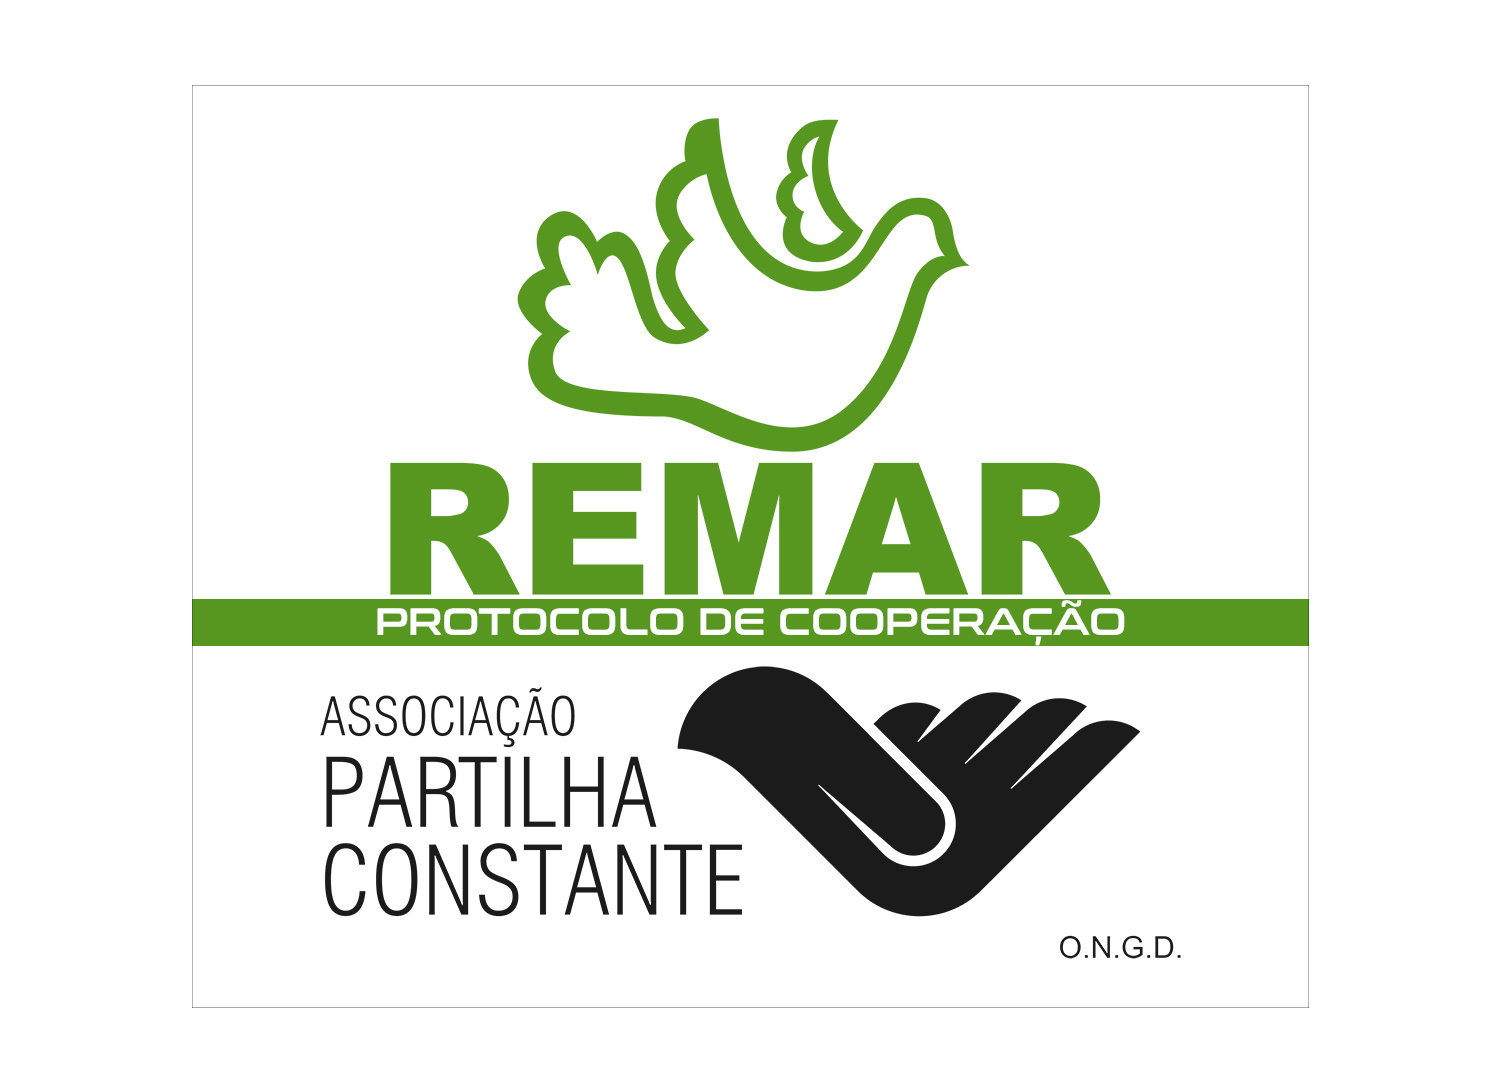 Partilha Constante ONGD - Remar Portugal logo